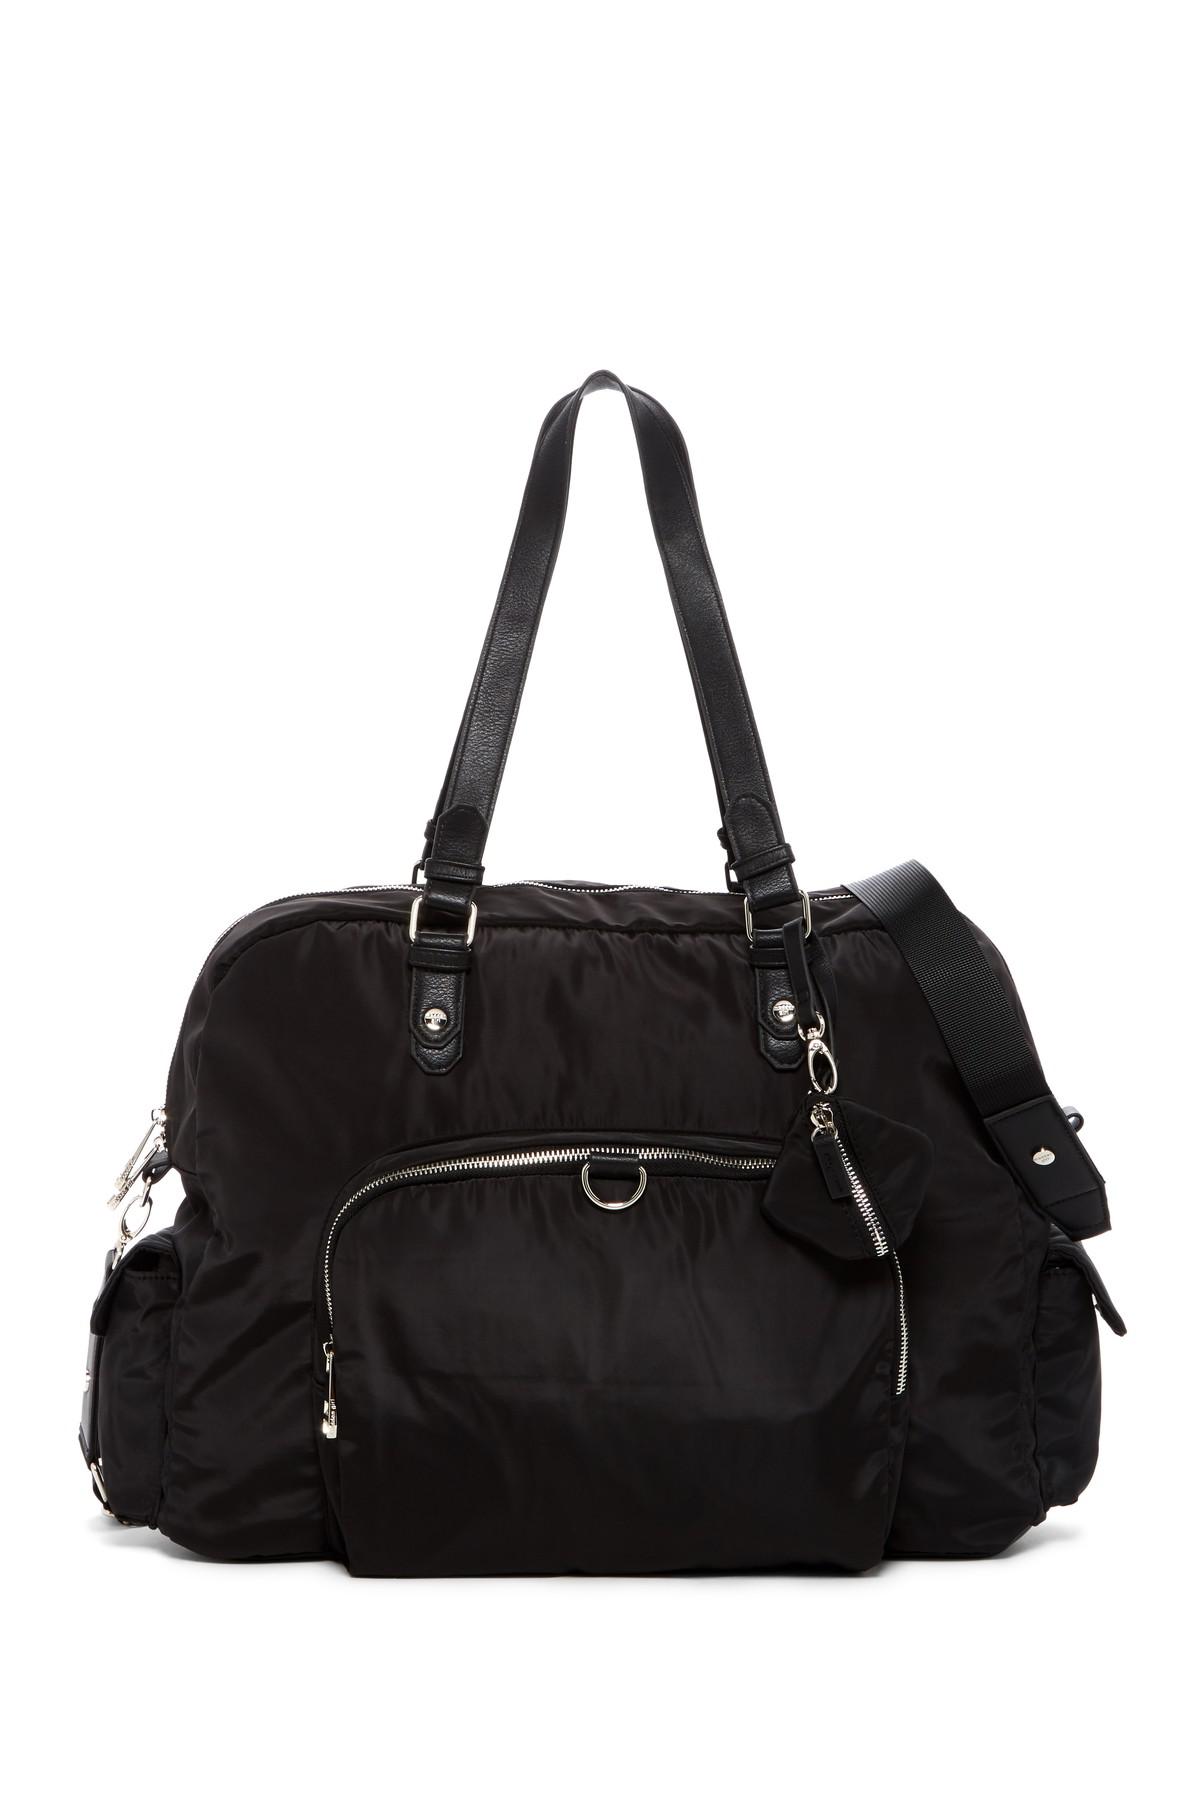 Lyst - Madden Girl Glory Nylon Large Weekend Bag in Black